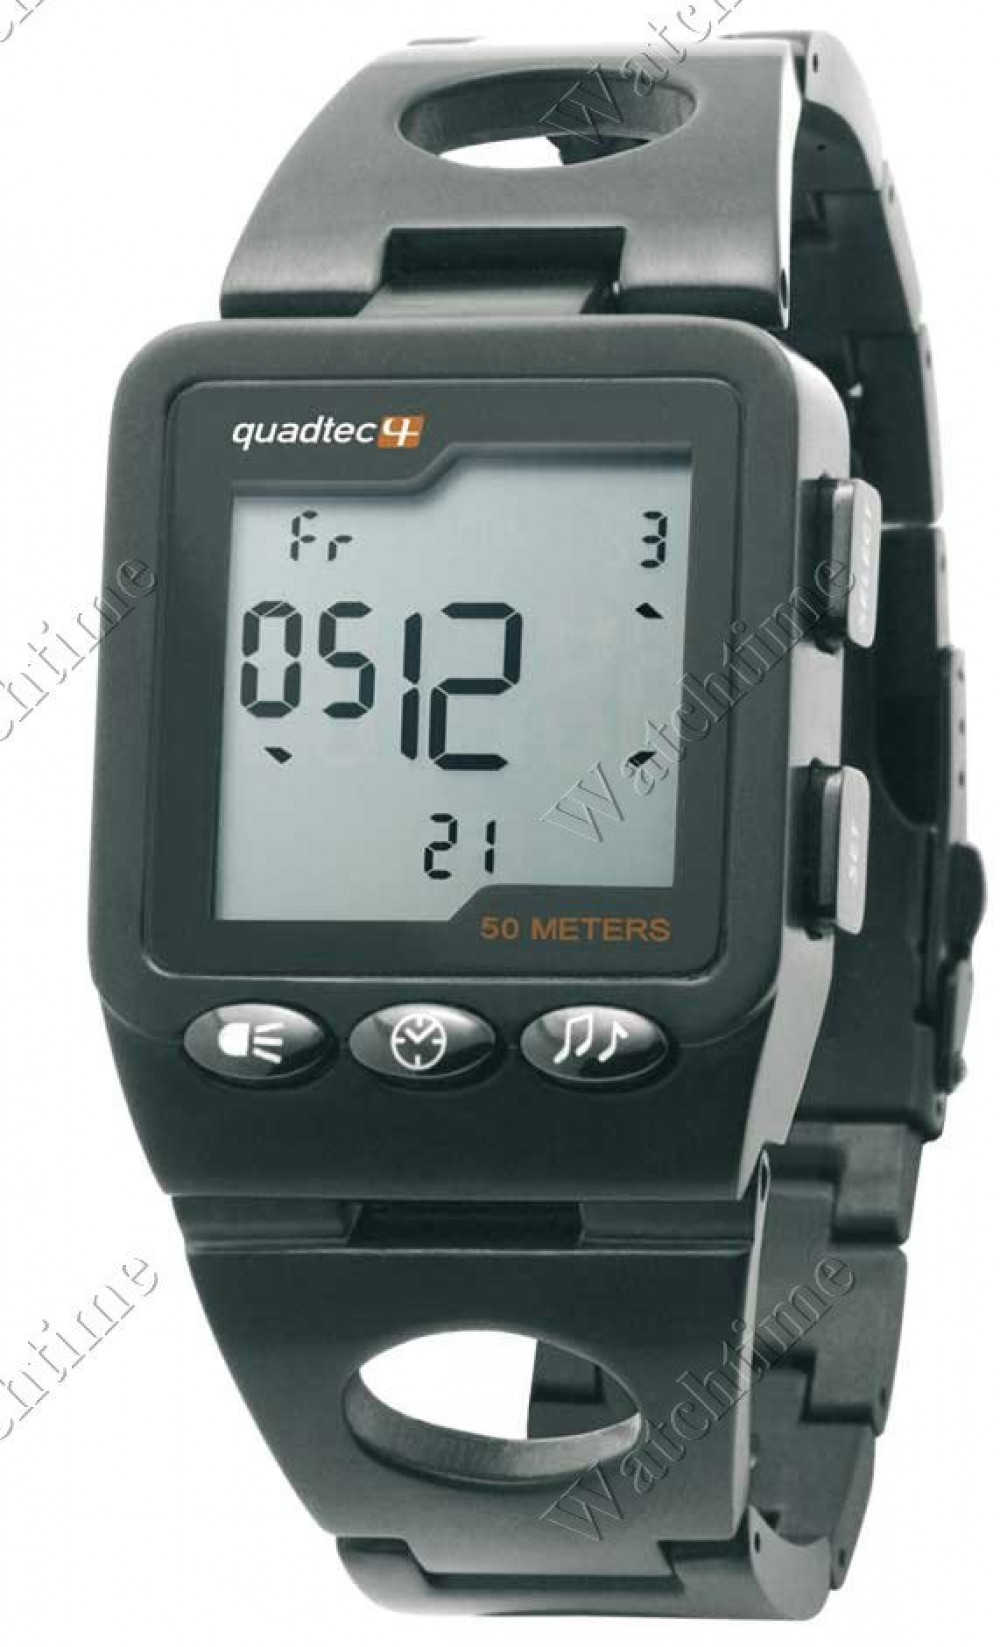 Zegarek firmy Quadtec, model QTBK-SS